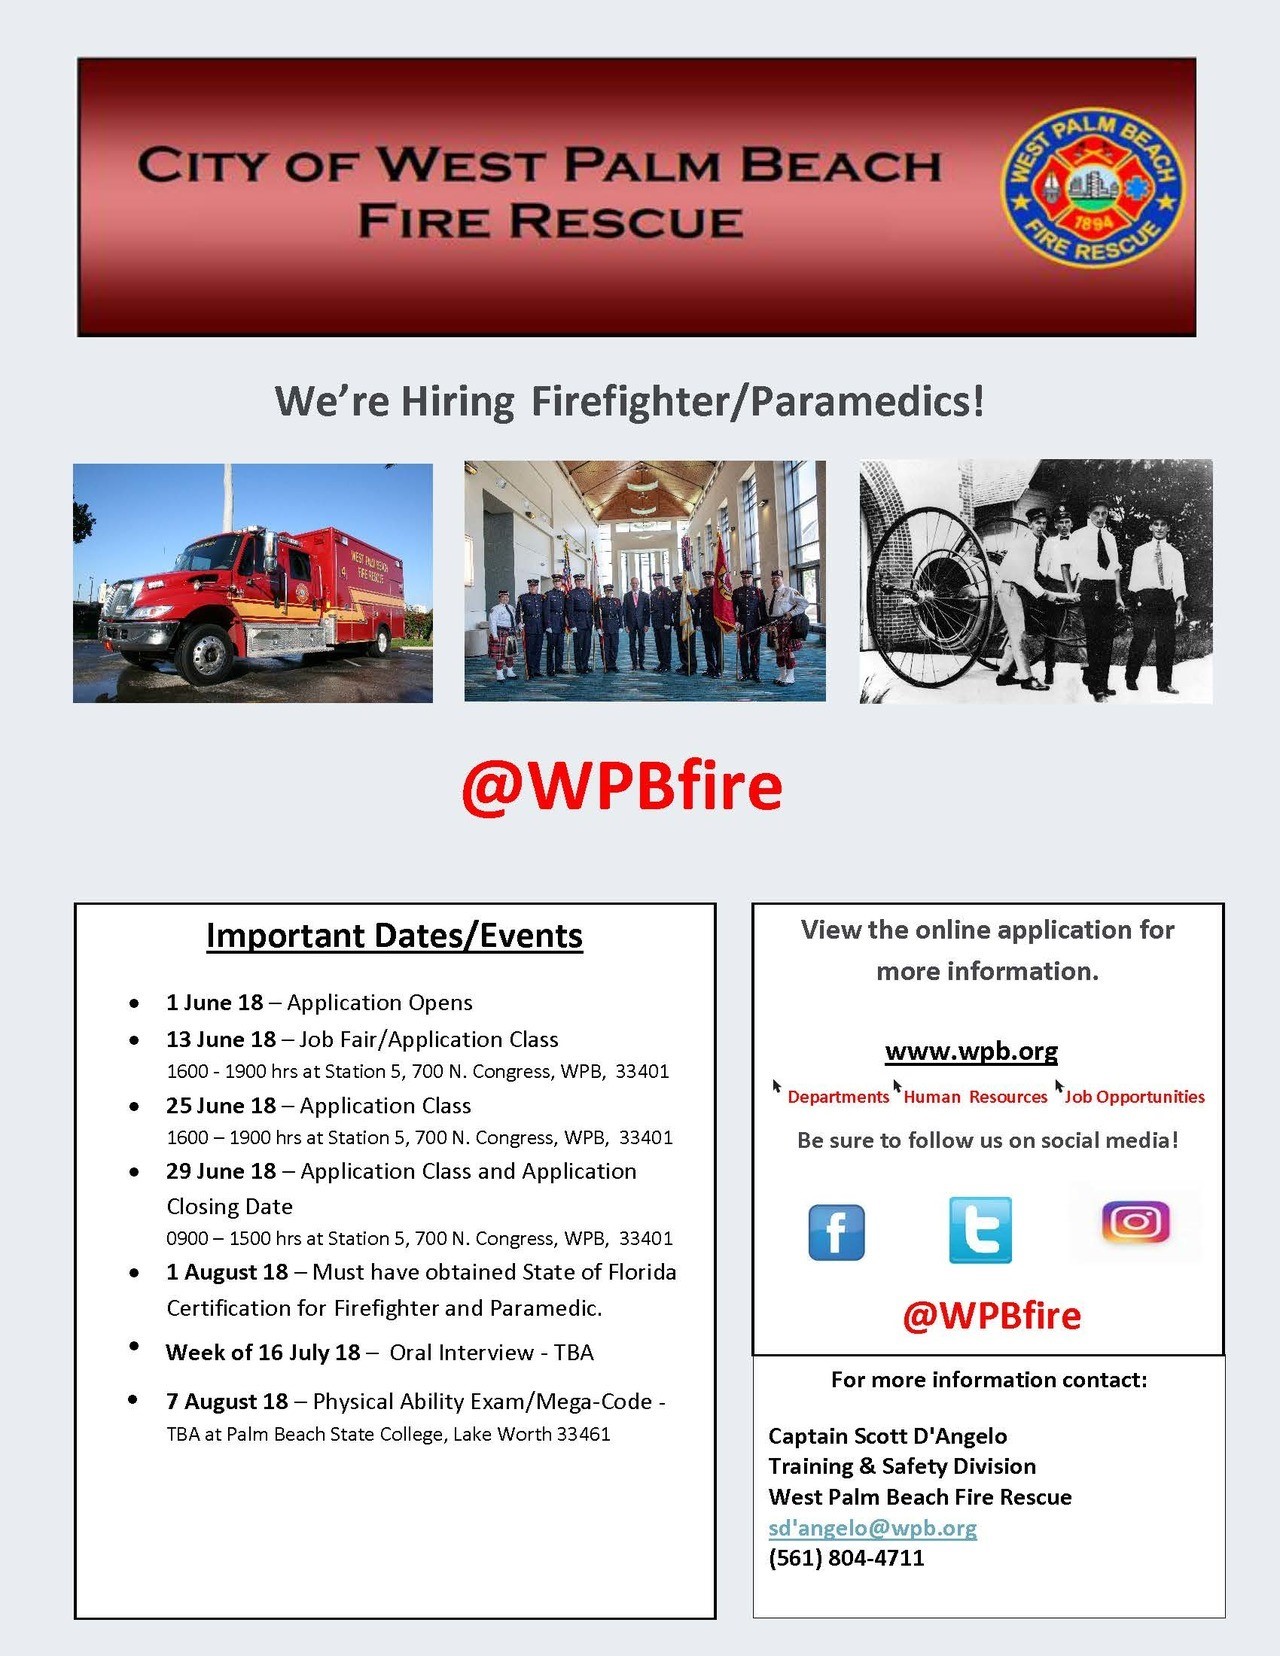 City of West Palm Beach Fire Rescue Hiring FF/Paramedics